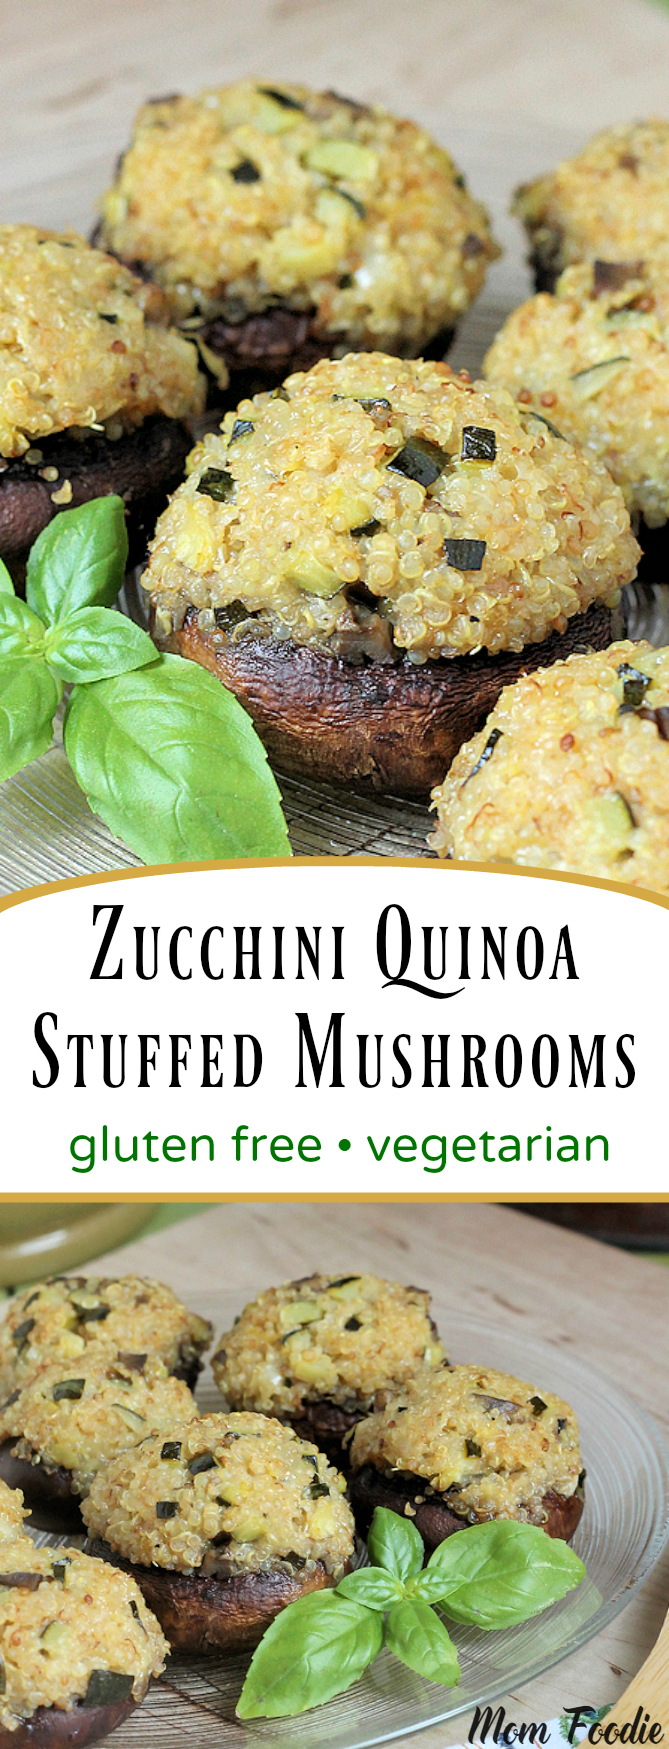 Gluten free Stuffed Mushrooms with Zucchini Quinoa Stuffing